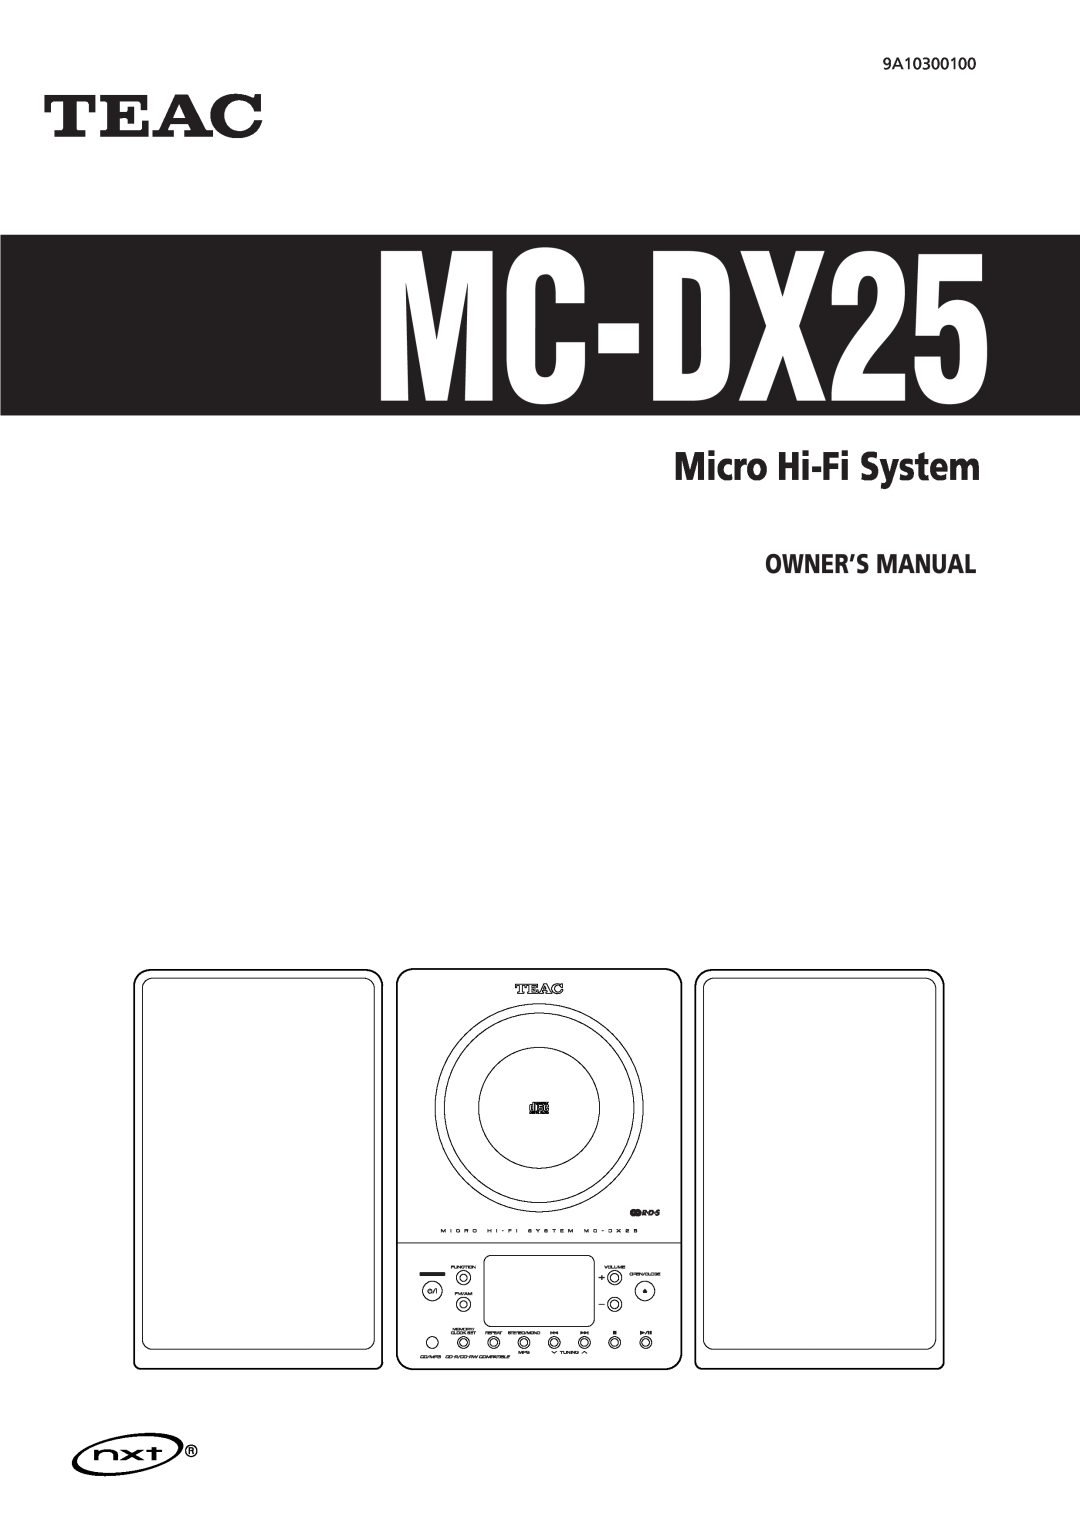 Teac MC-DX25 owner manual Micro Hi-FiSystem 